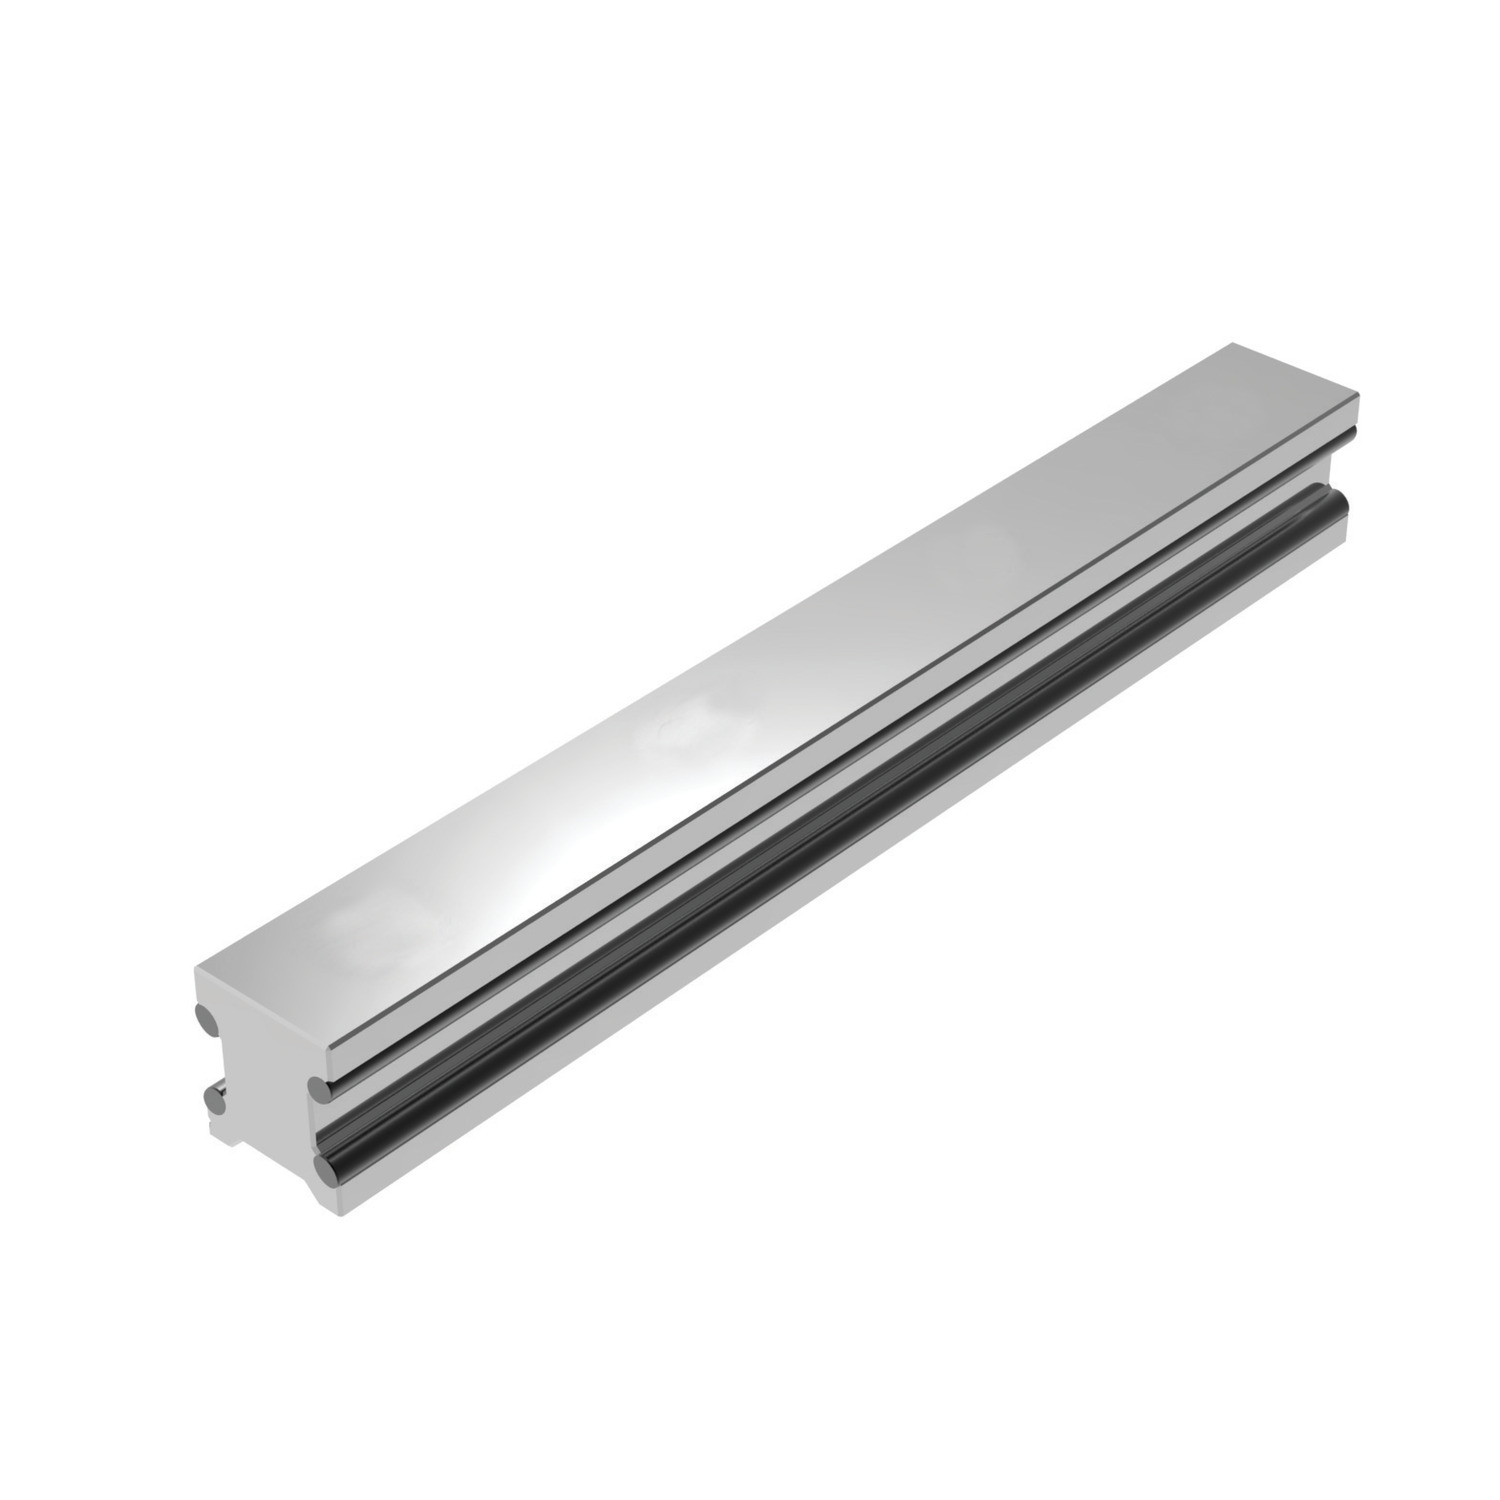 L1018.25 25mm Aluminium Linear Guide Rail